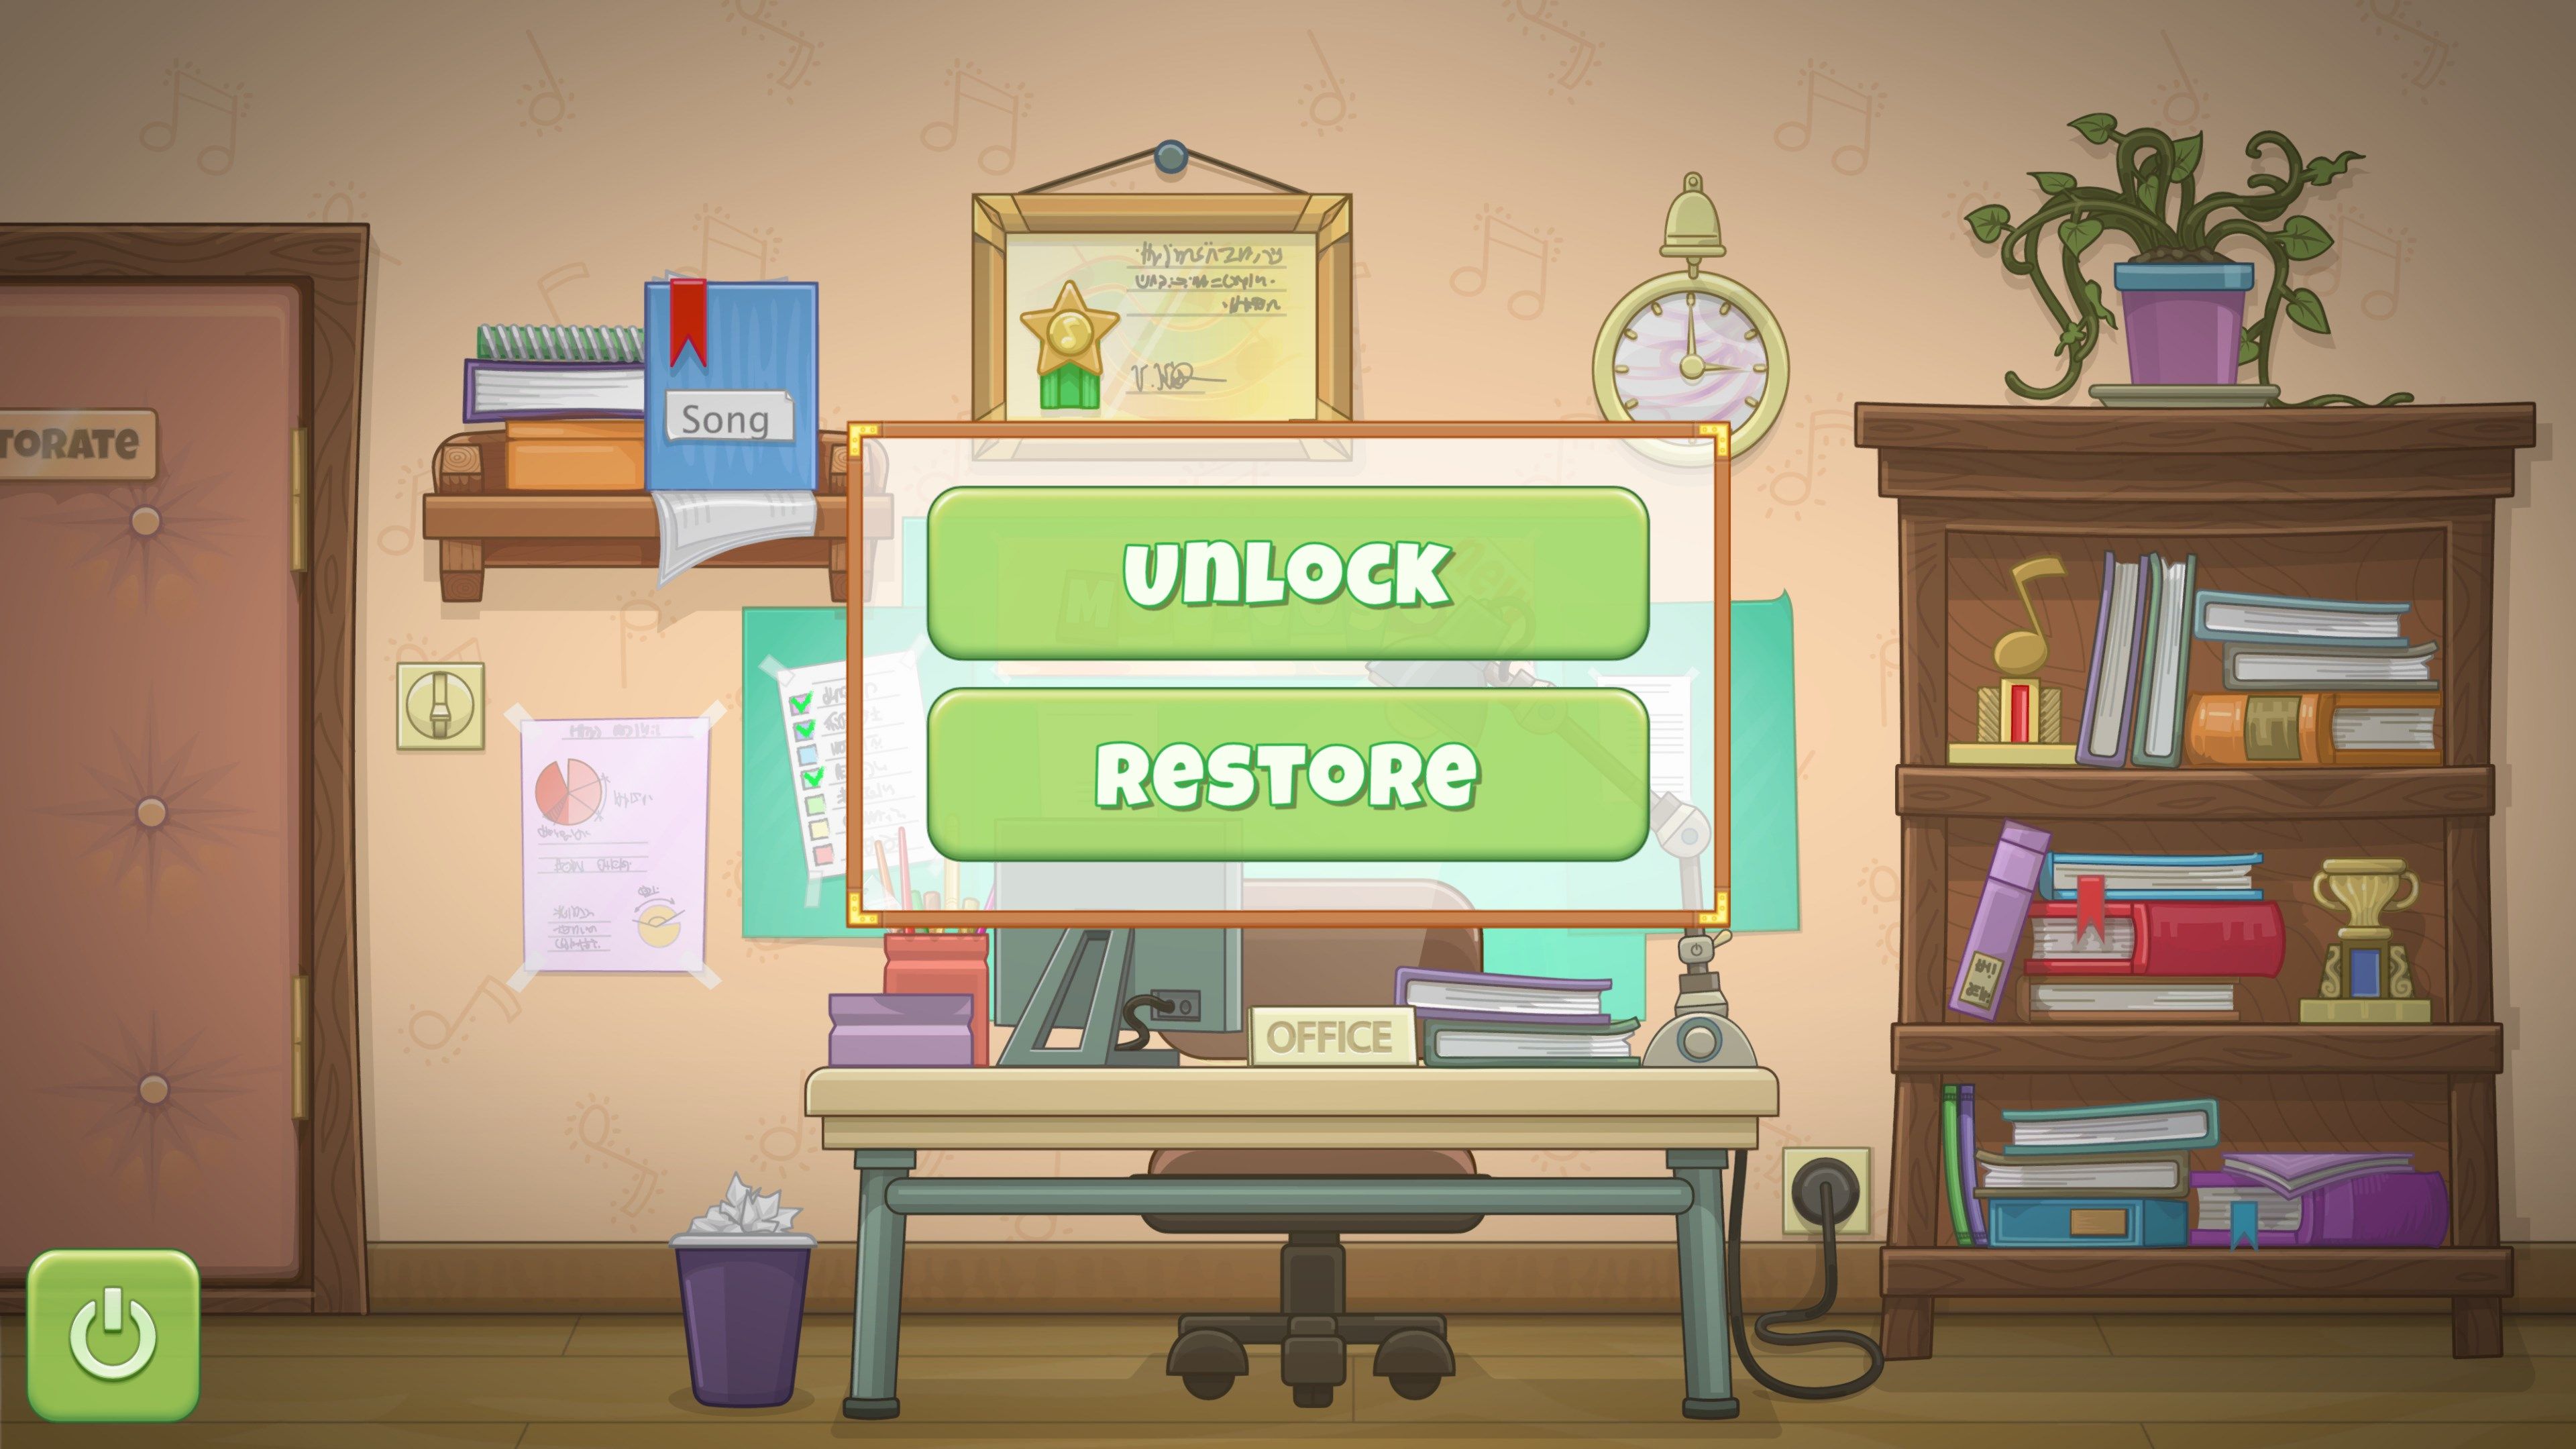 Unlock or Restore